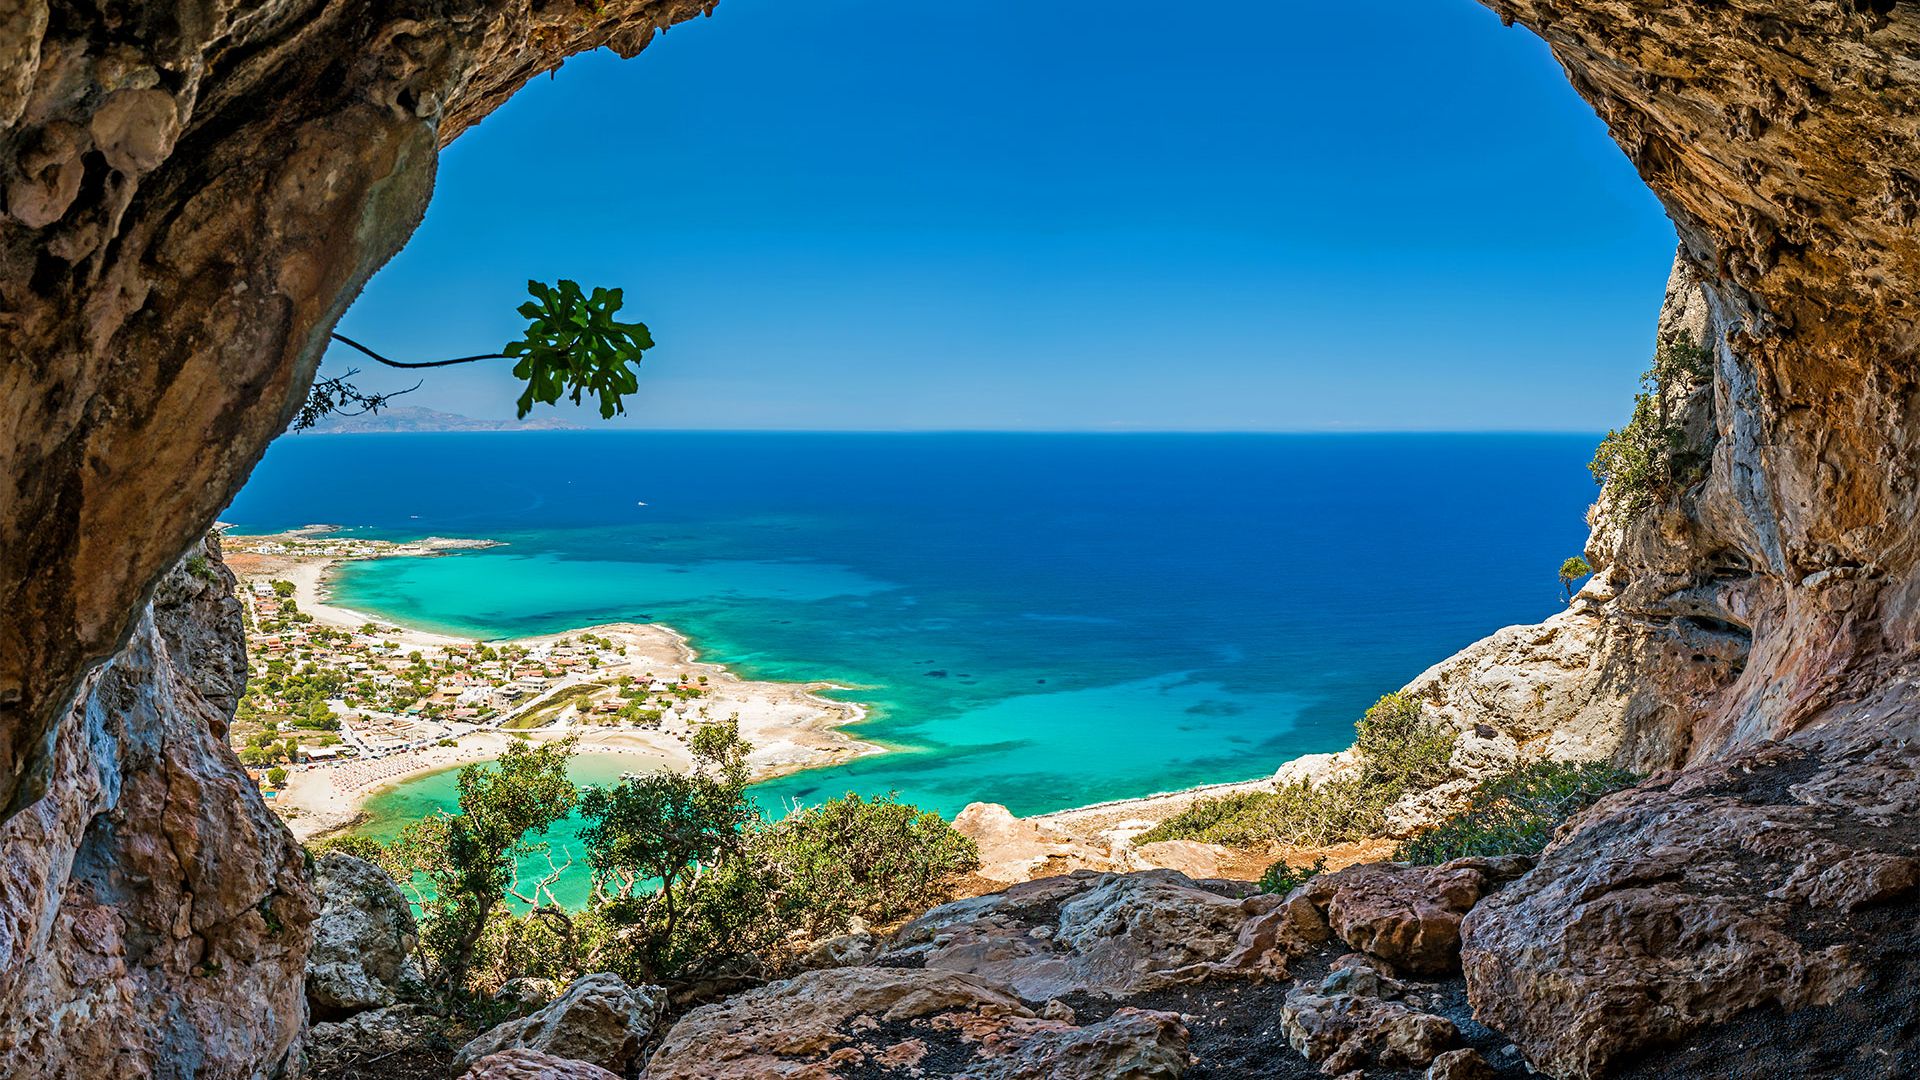 Oferta speciala - Sejur charter Heraklion - insula Creta, 8 zile - 6 septembrie